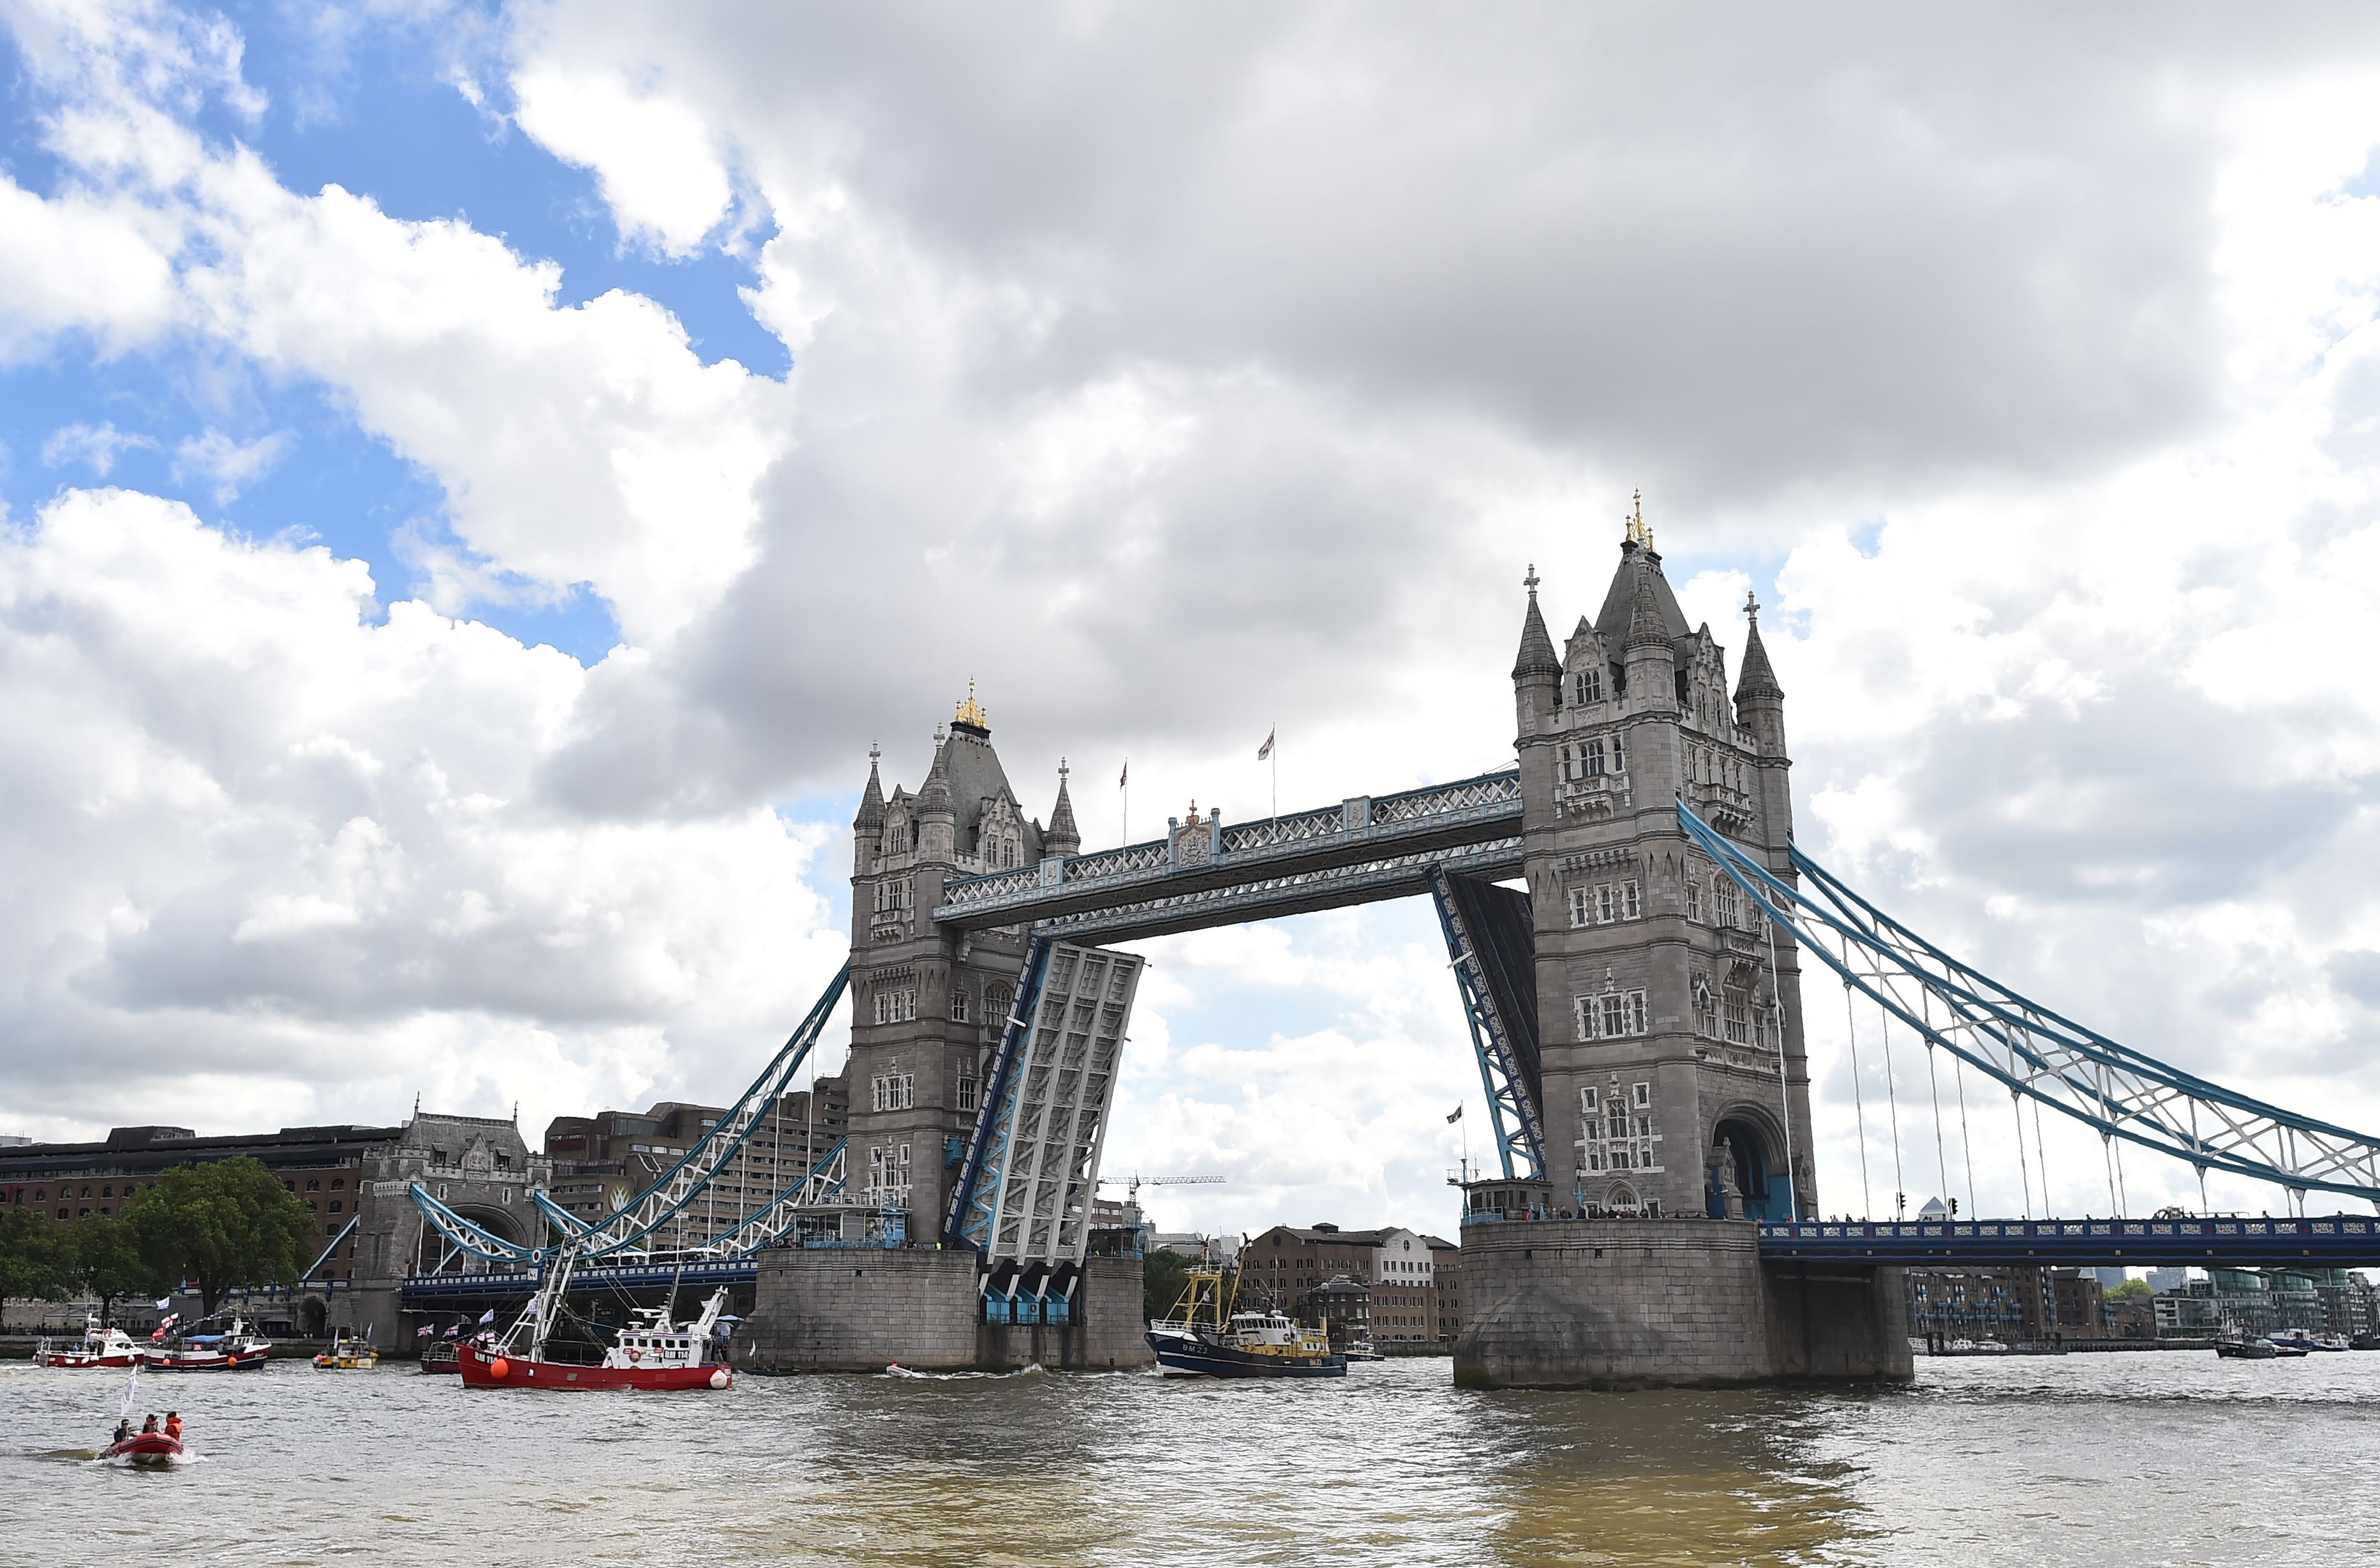 Brexit campaign sends flotilla along the River Thames